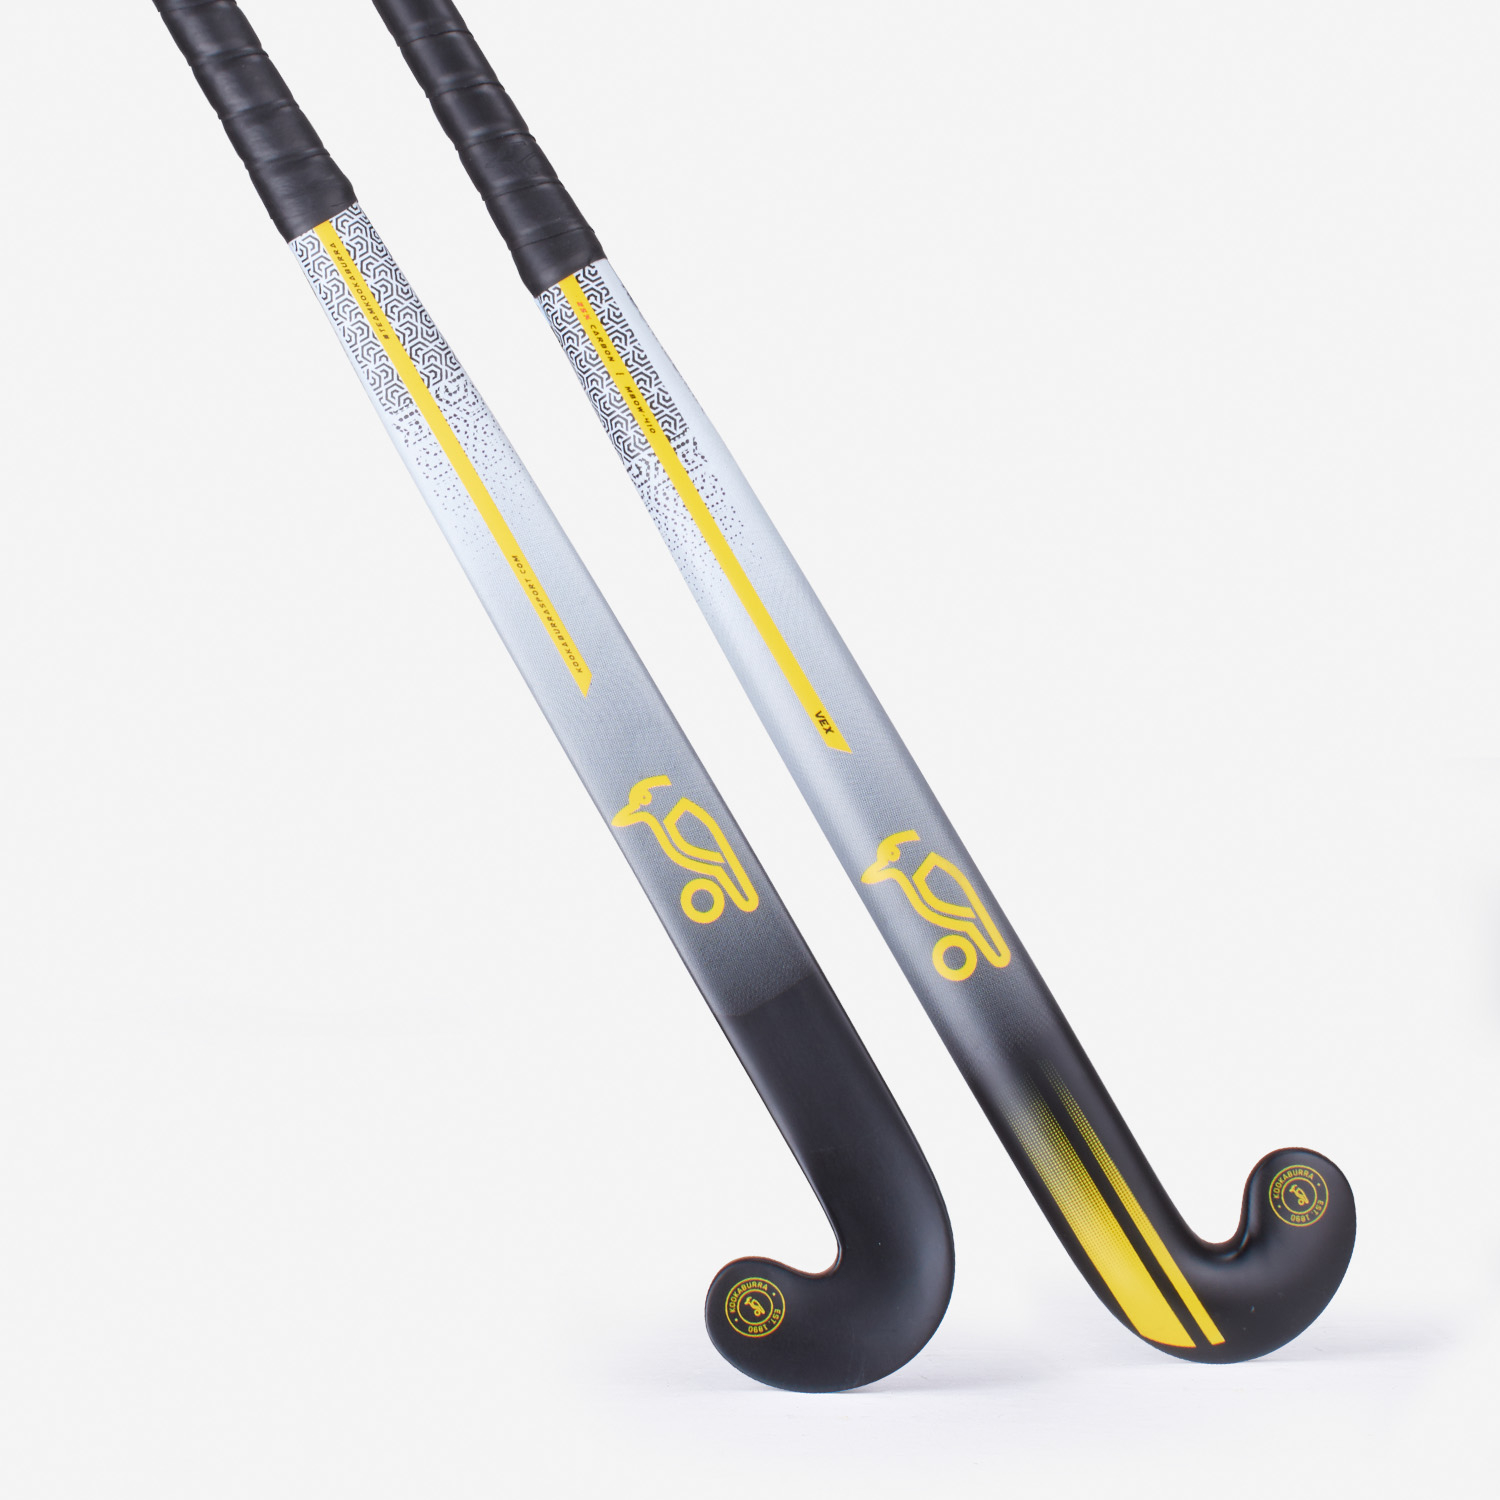 Kookaburra Vex Hockey Stick